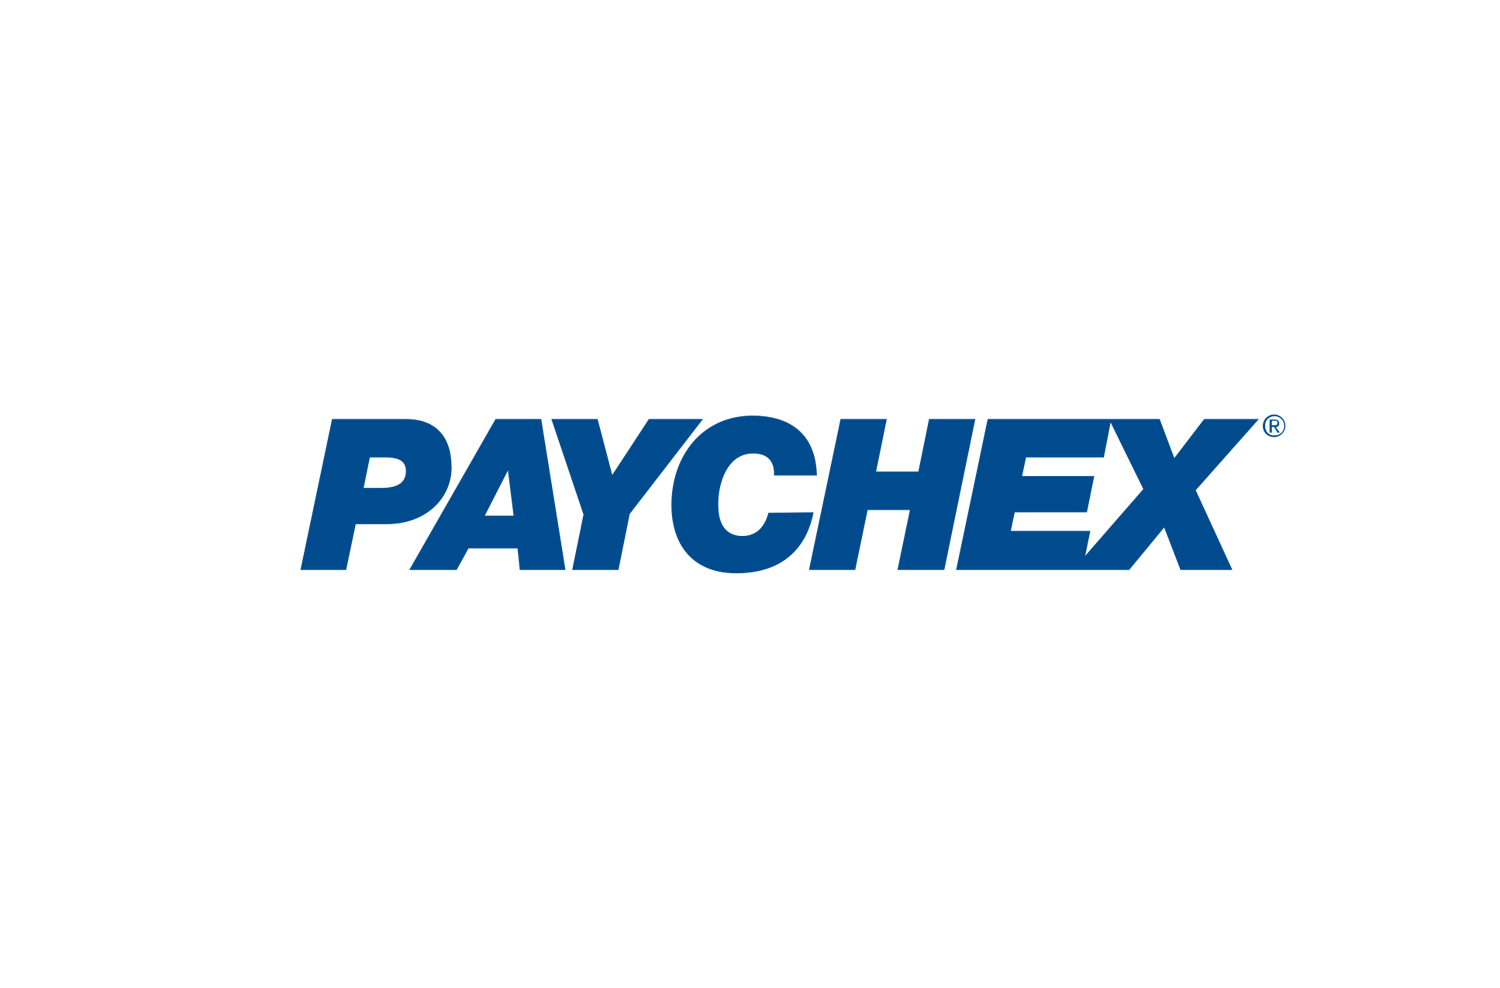 Paychex logo.